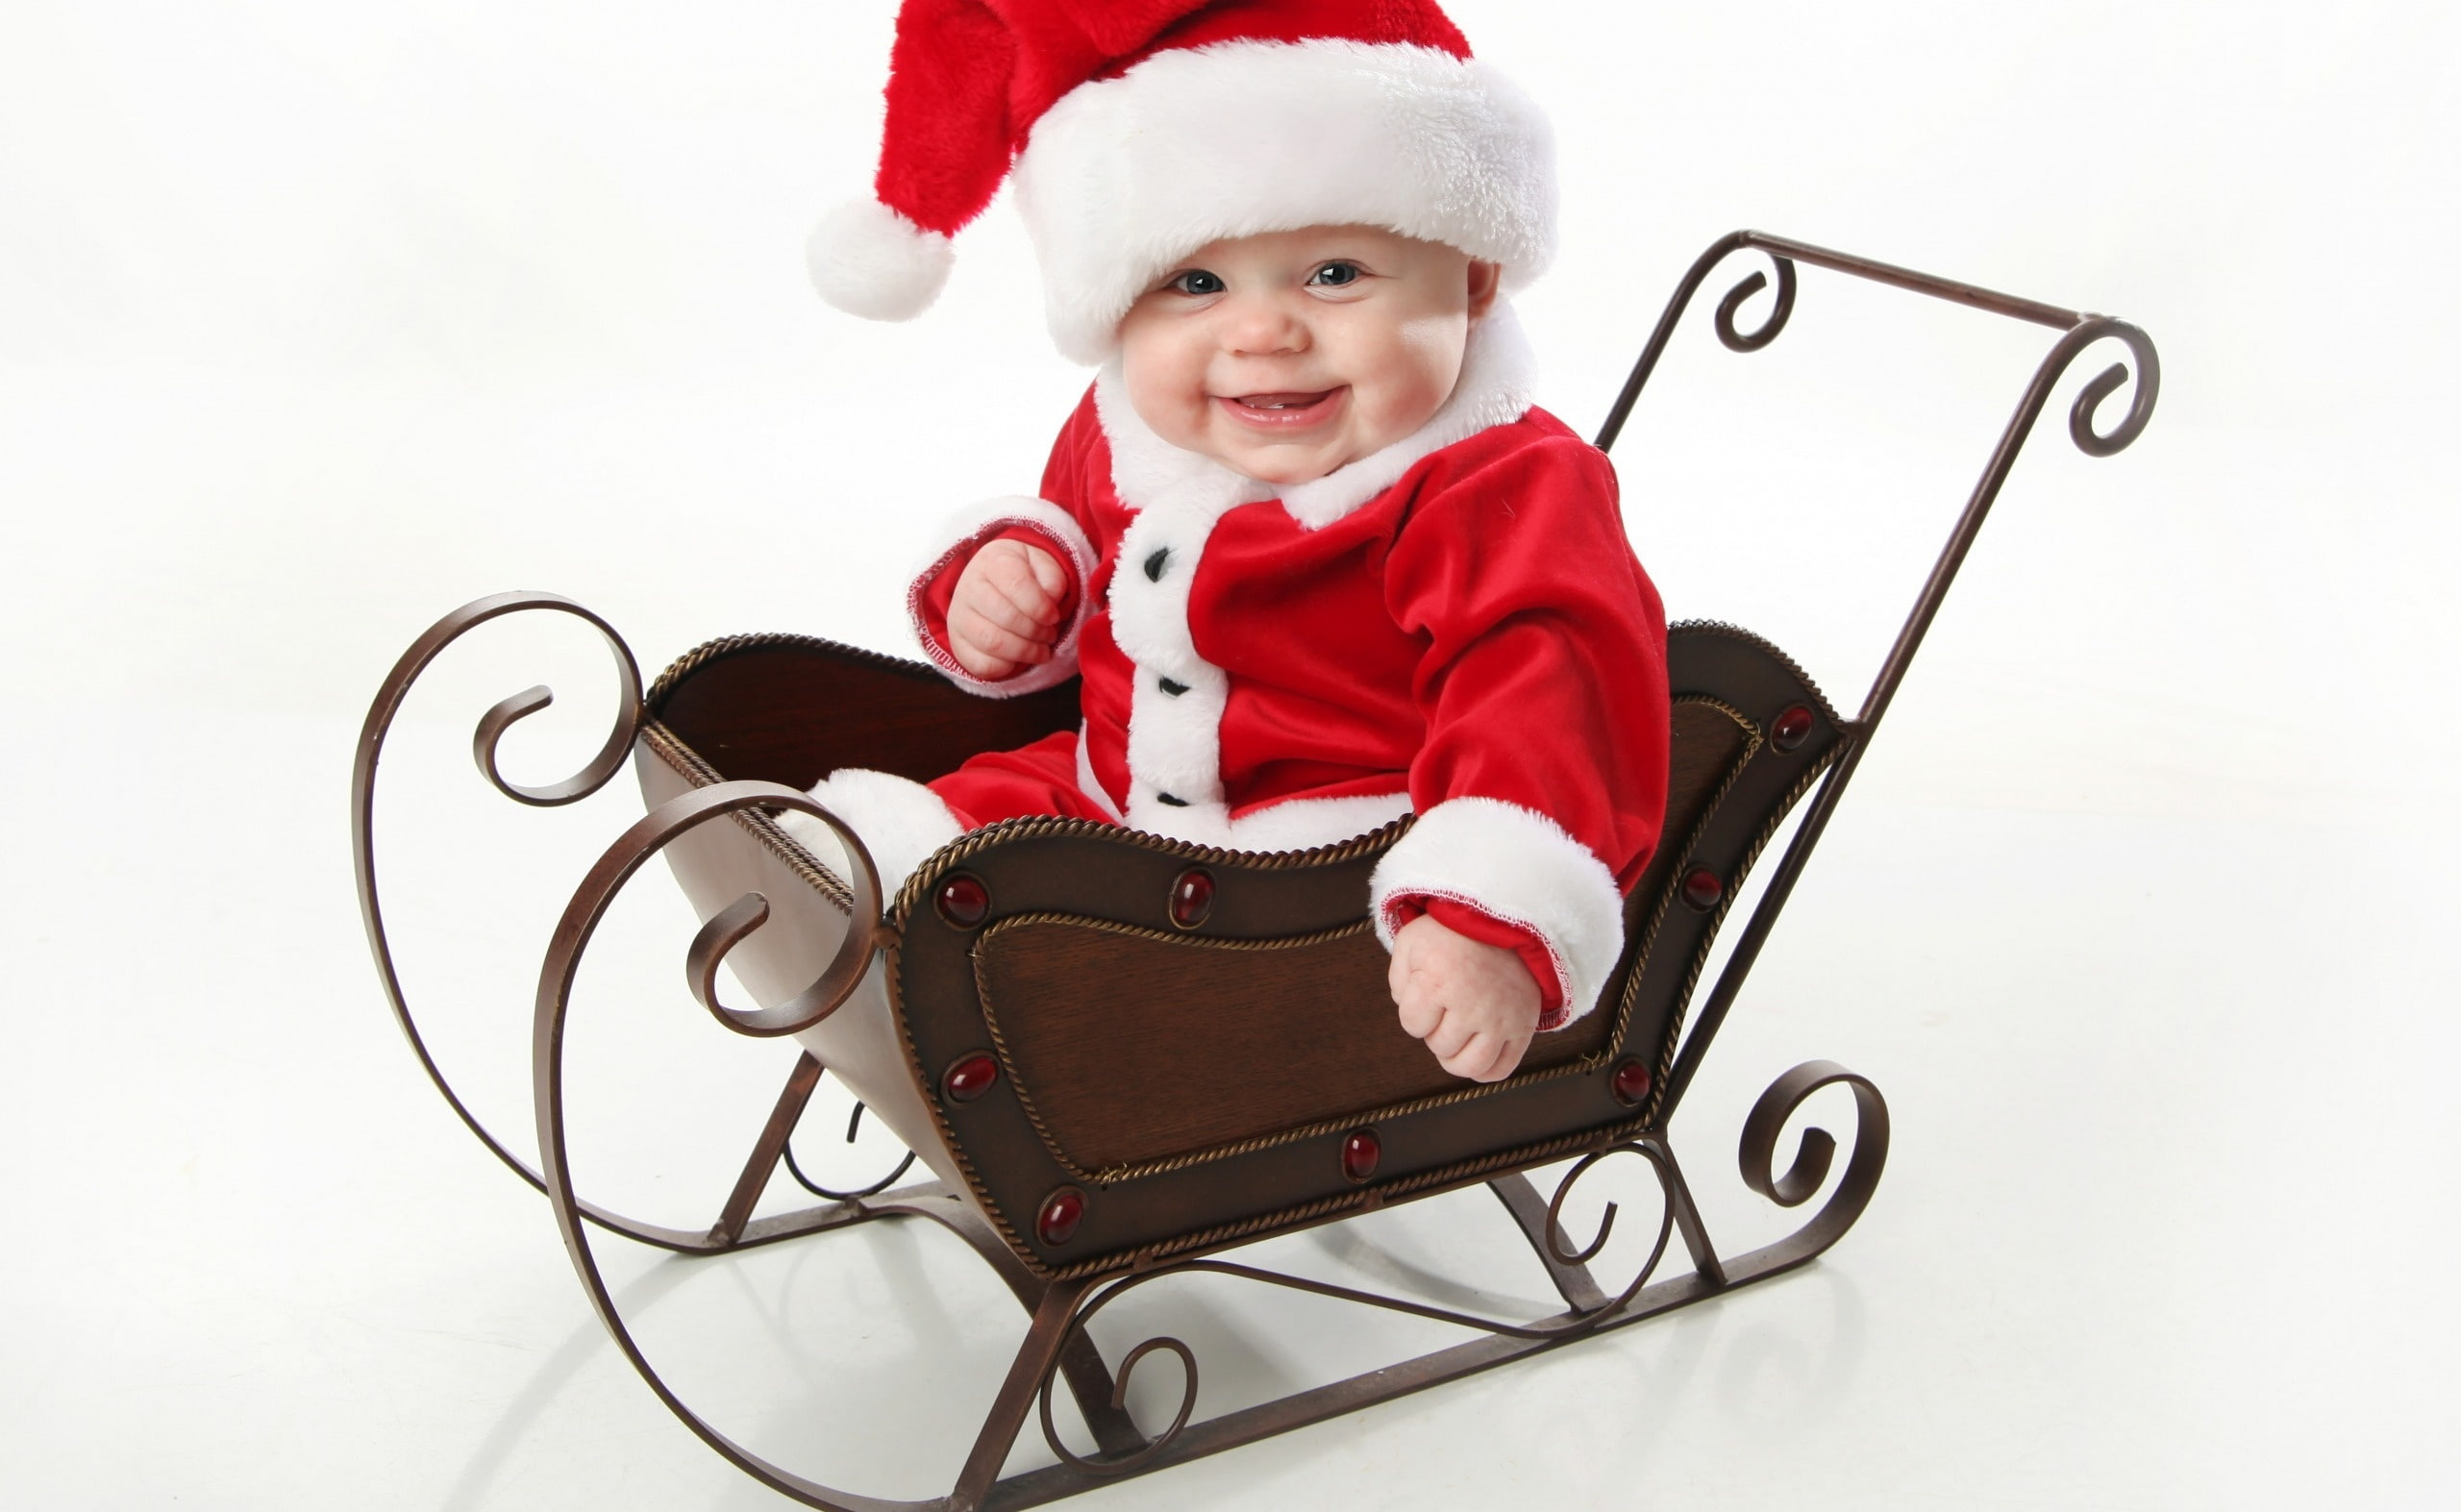 Cute Little Santa, baby's Santa costume, Holidays, Christmas